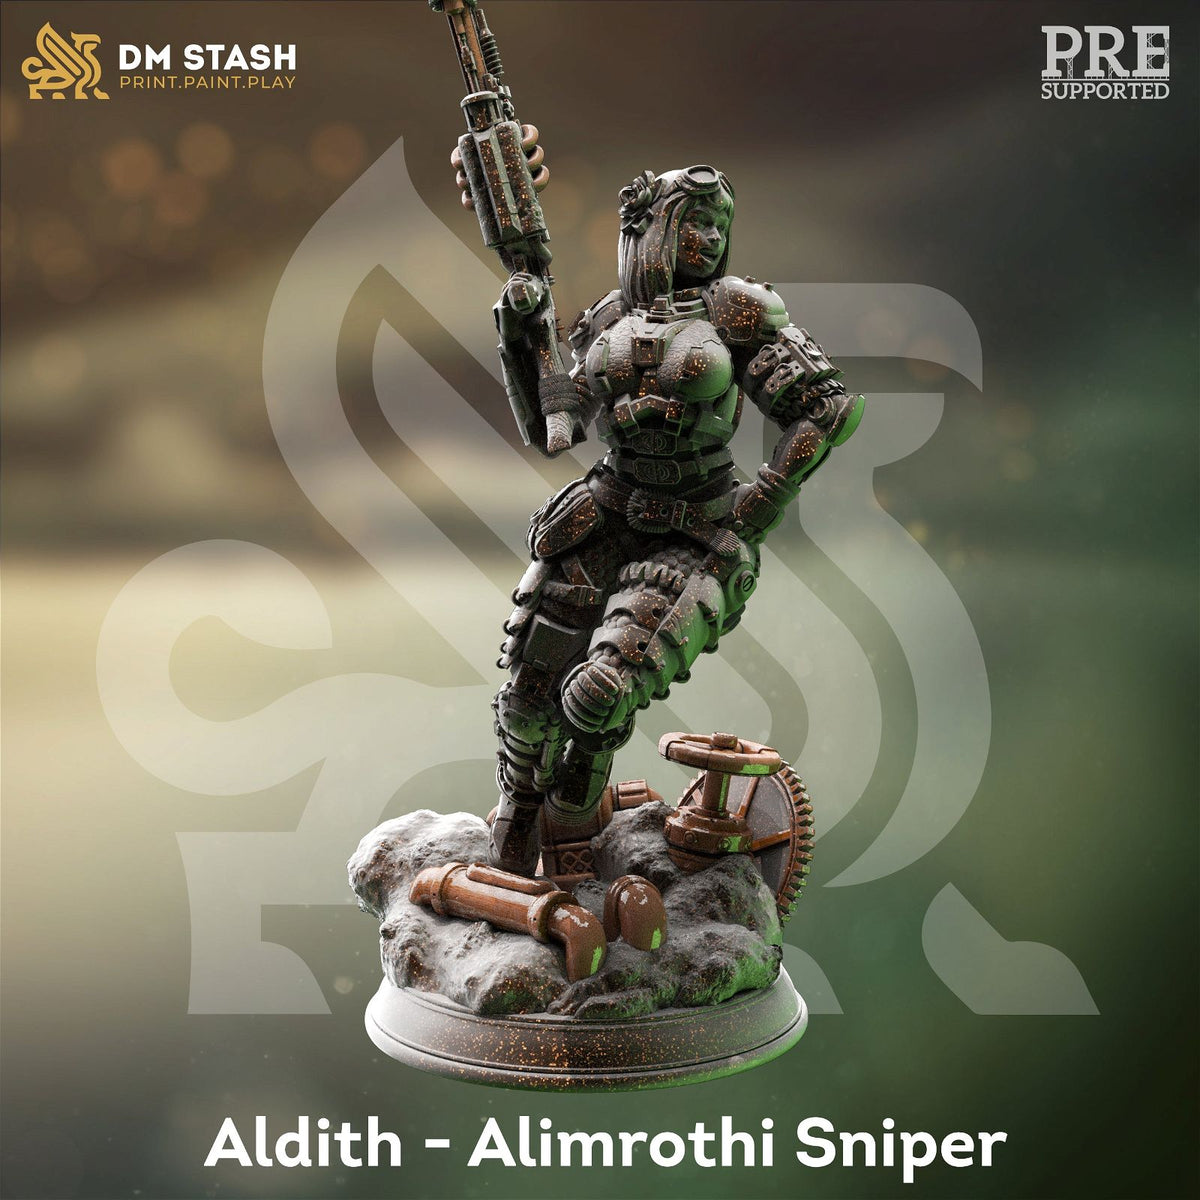 Aldith Alimrothi Sniper - The Printable Dragon